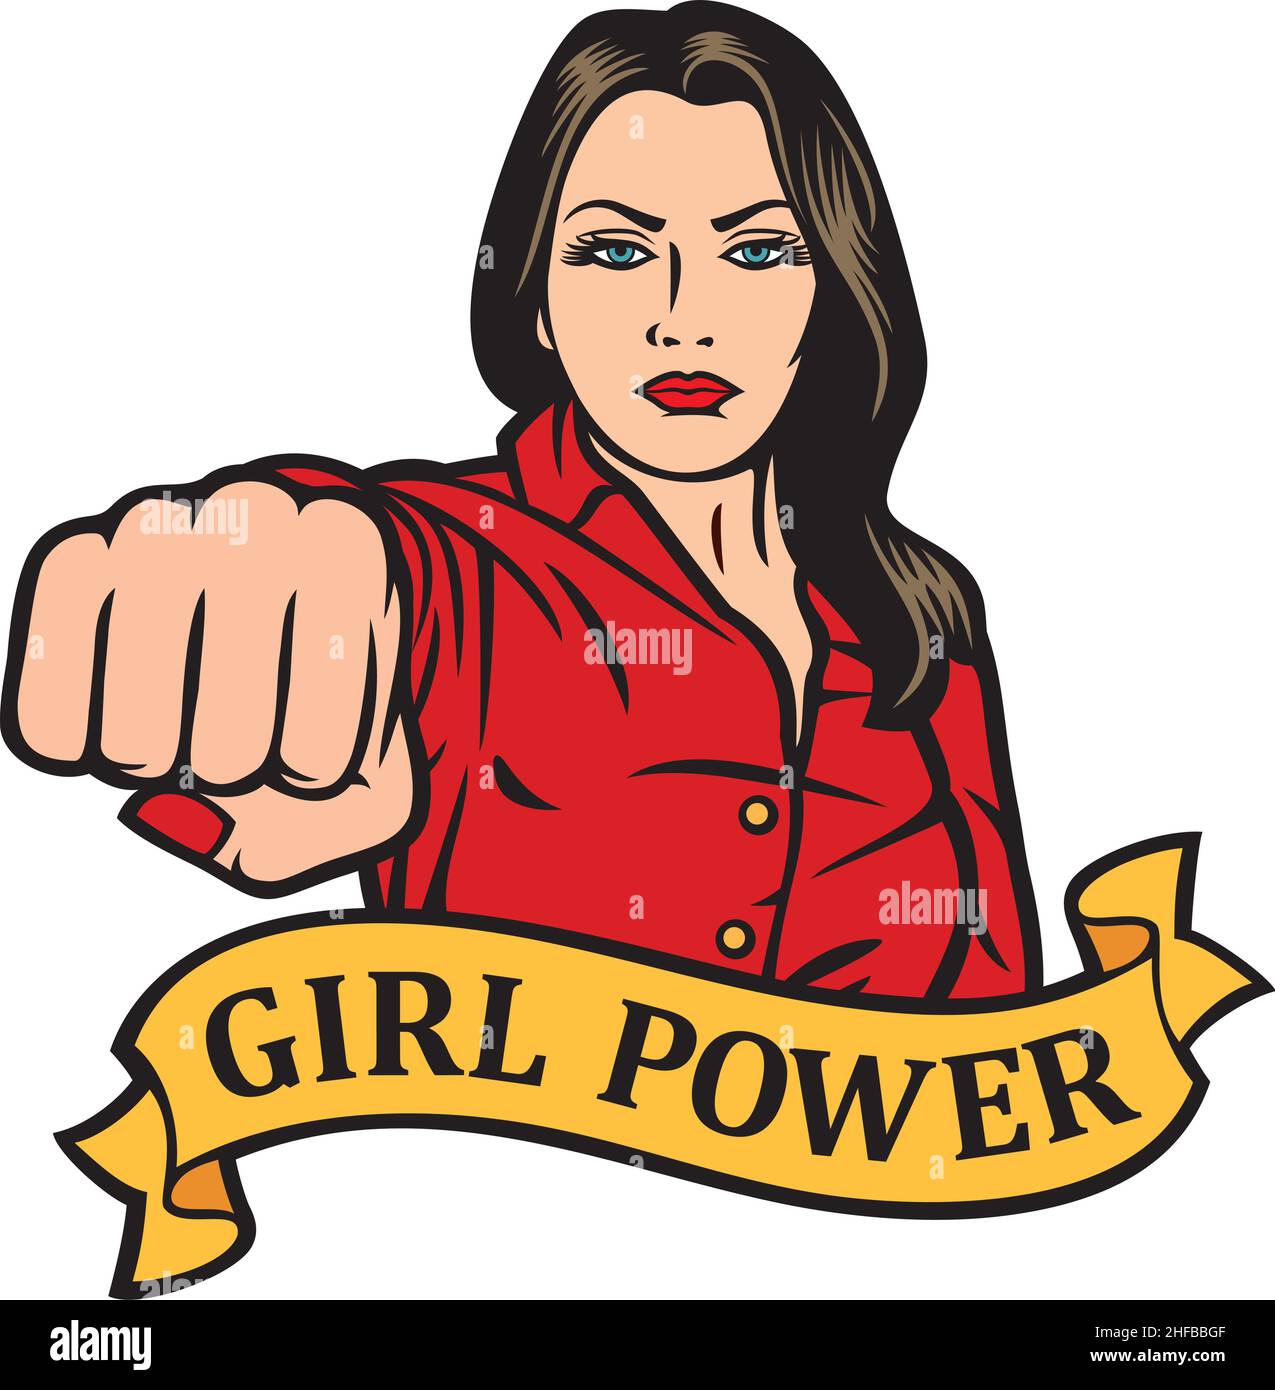 Girl power design - woman punching. Vector illustration Stock Vector